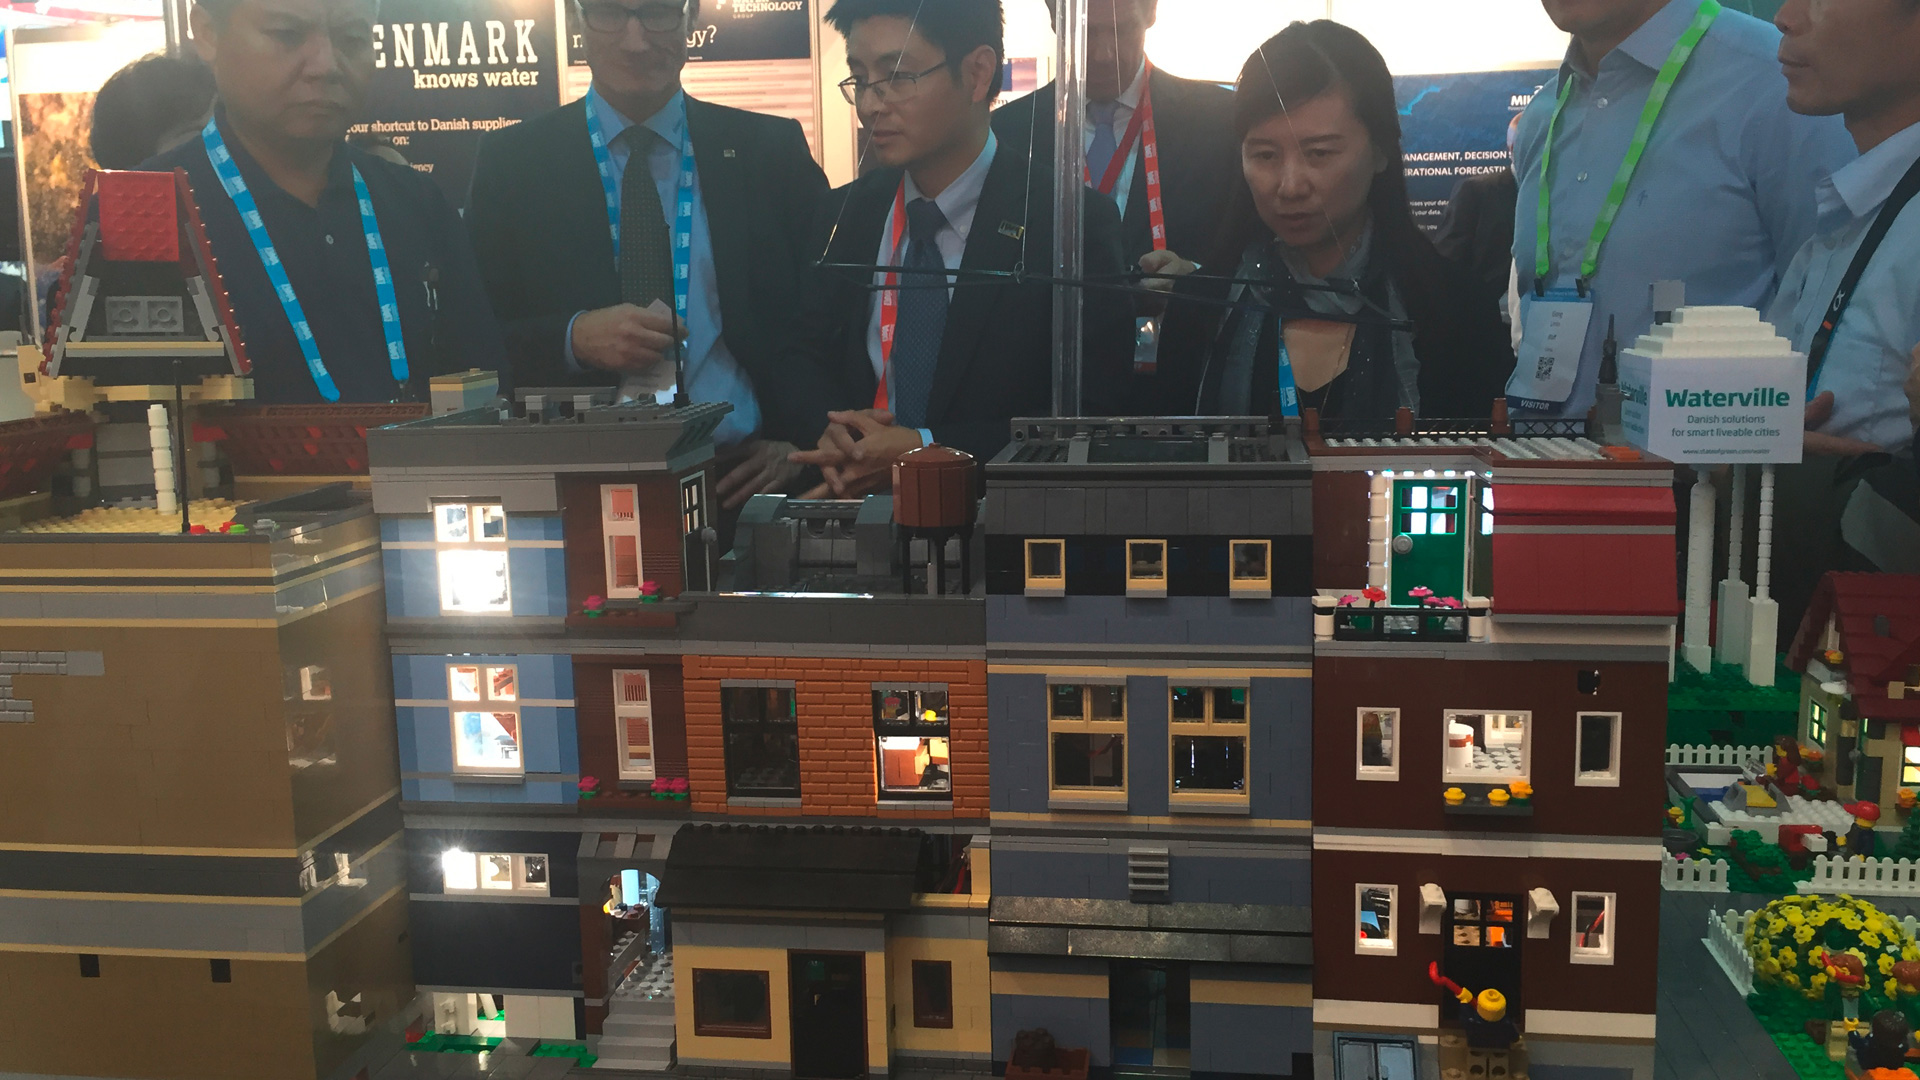 City model made by LEGO bricks